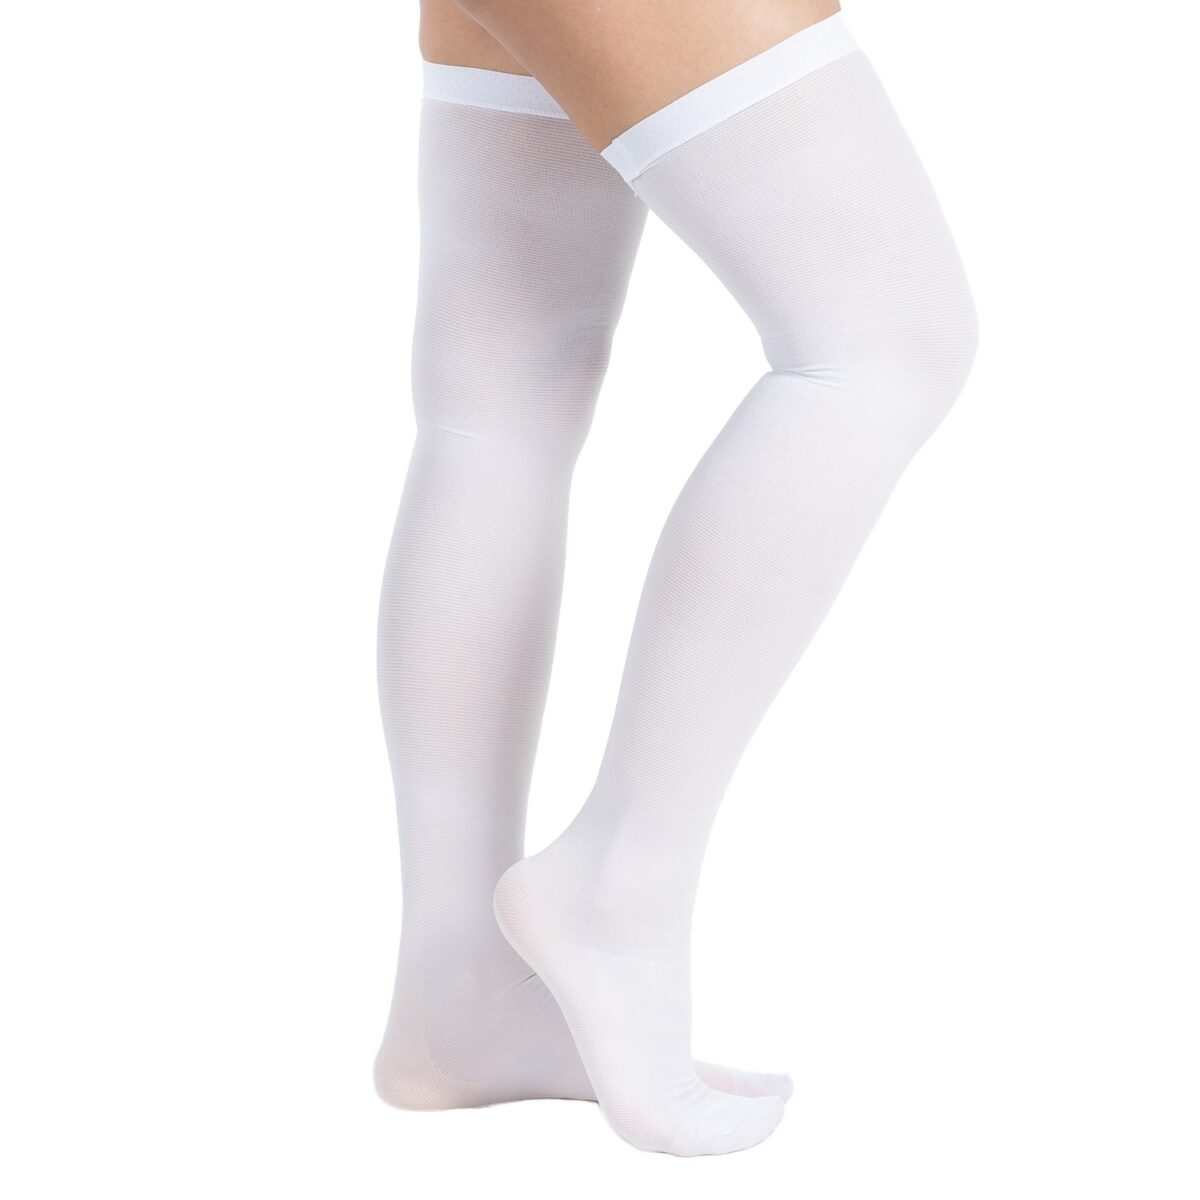 wingmed orthopedic equipments W1320 anti embolism stockings thigh high pair 19